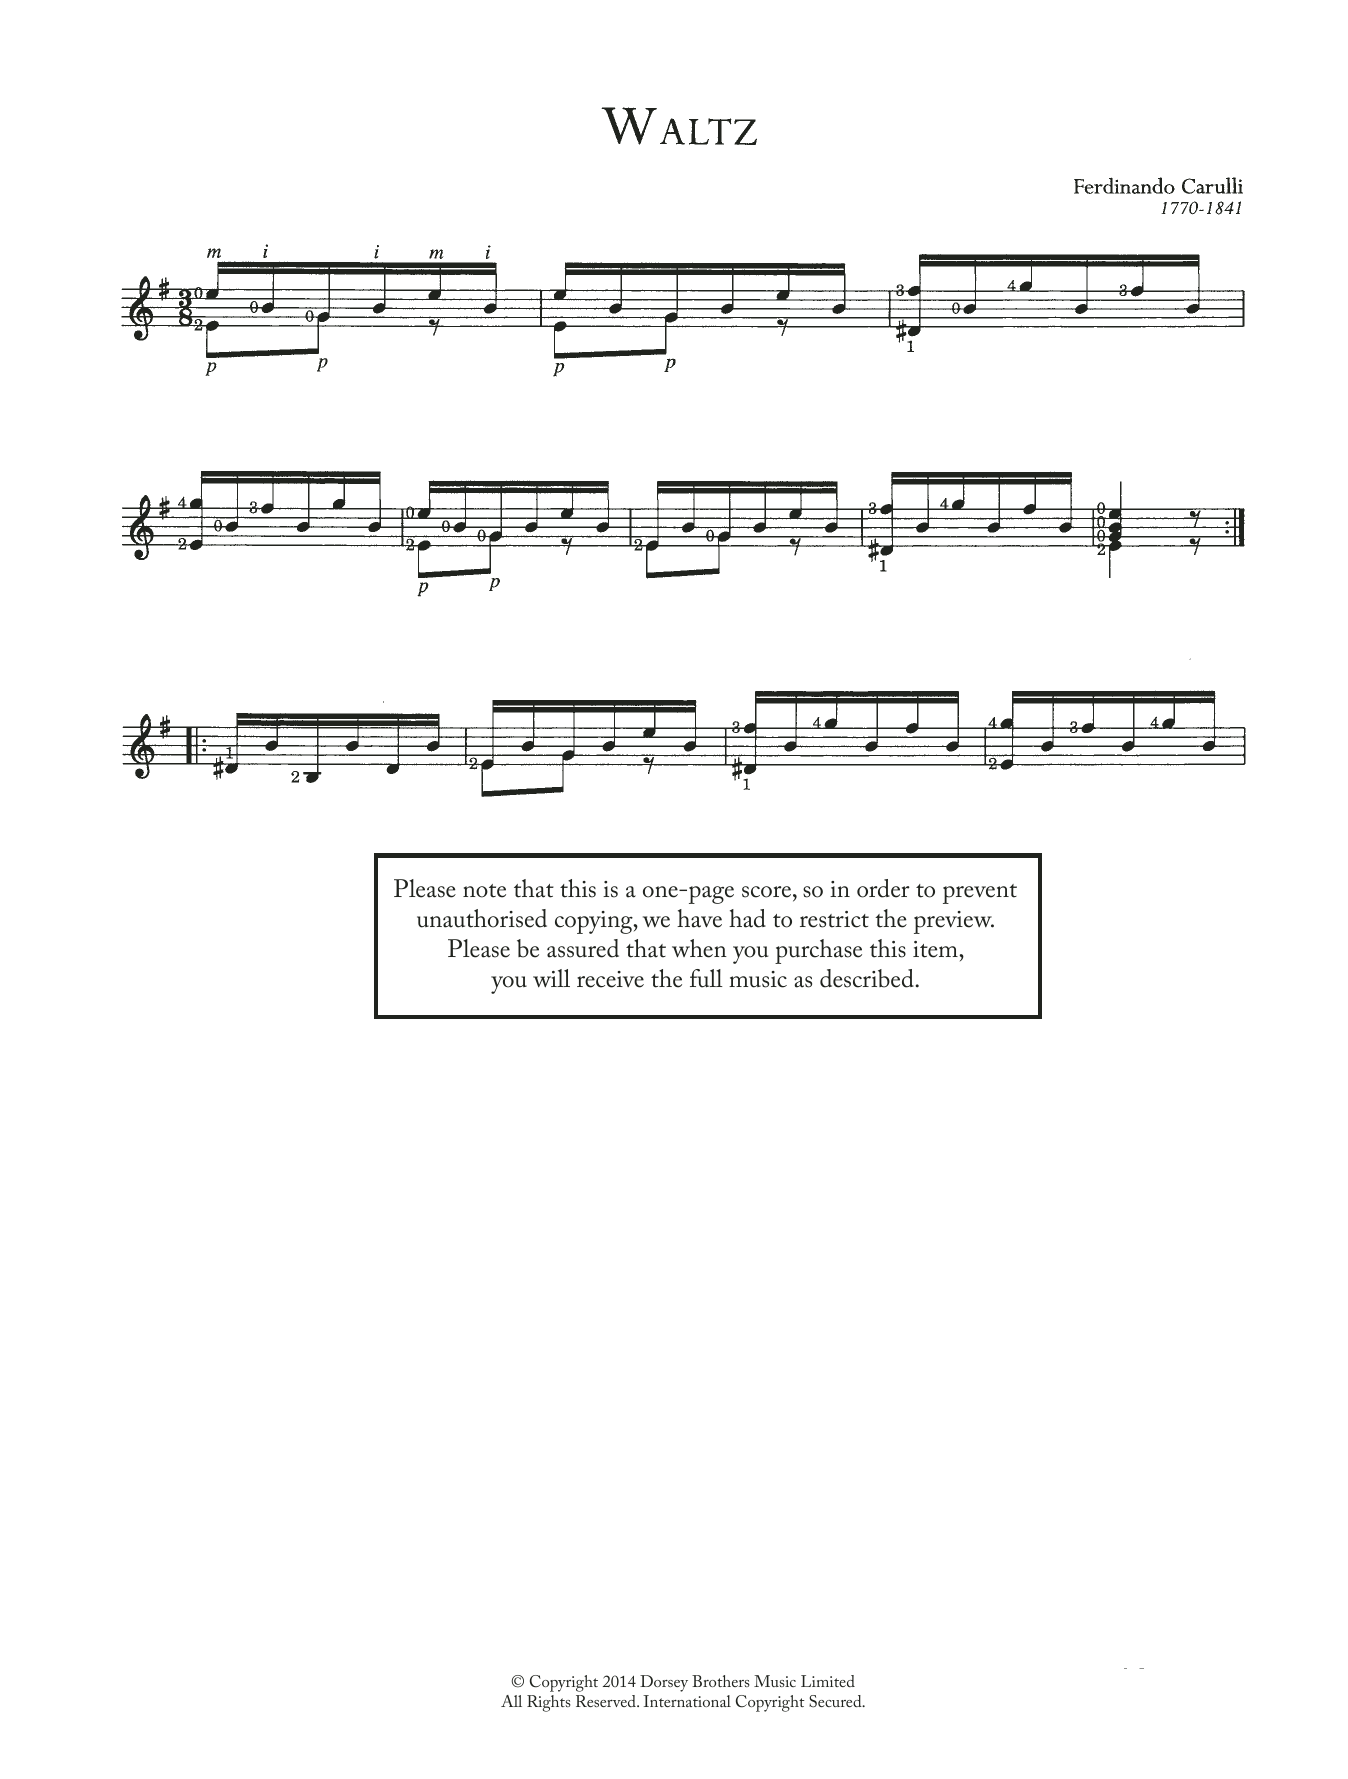 Ferdinando Carulli Waltz Sheet Music Notes & Chords for Guitar - Download or Print PDF